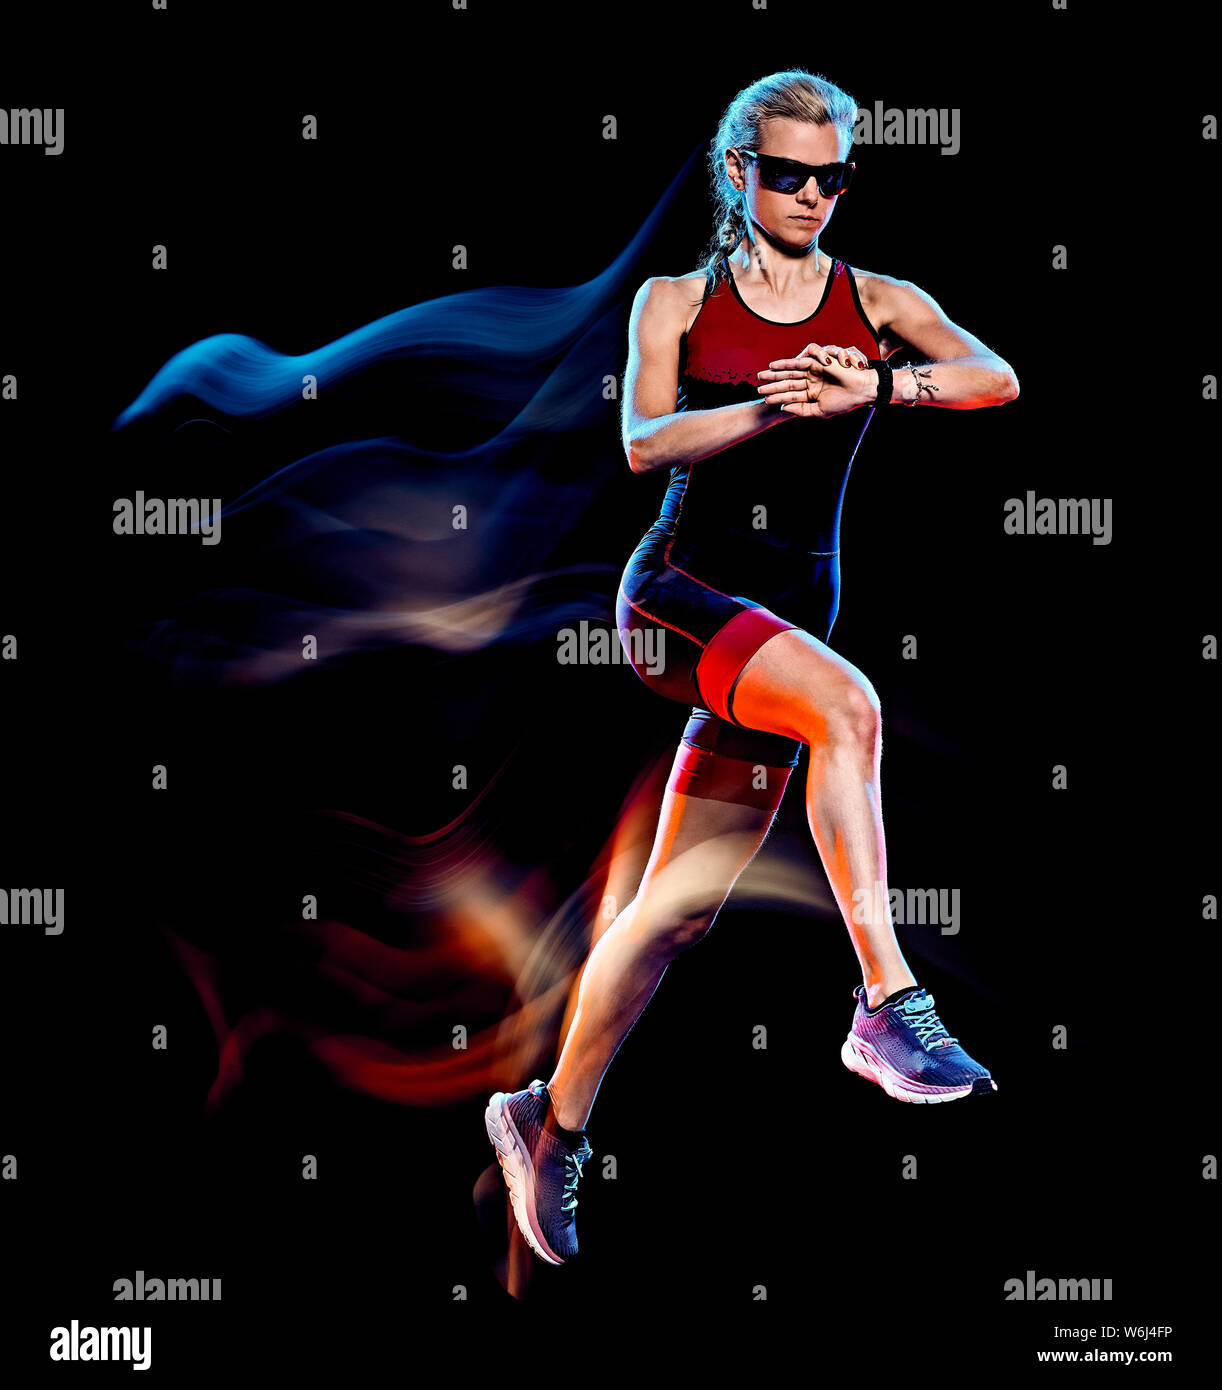 Un triathlète triathlon woman runner running jogging joogger studio shot isolé sur fond noir avec effet light painting Banque D'Images